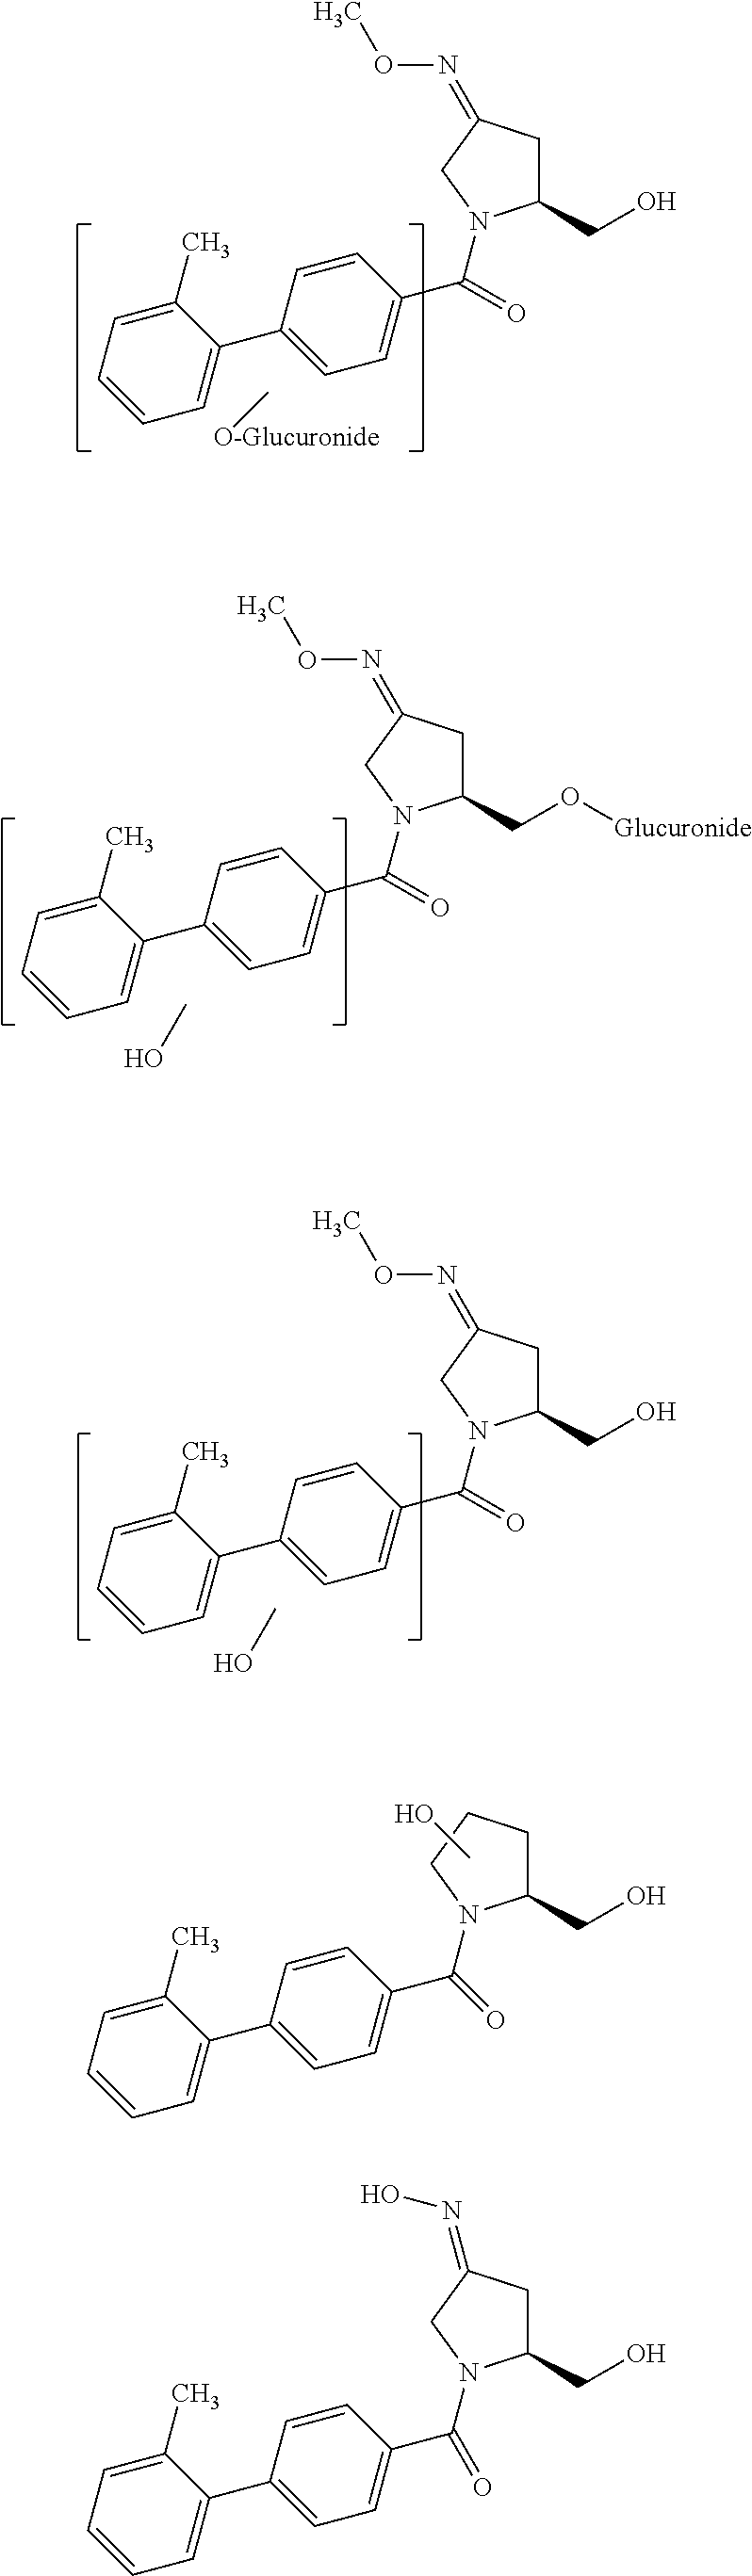 Oral formulations of pyrrolidine derivatives